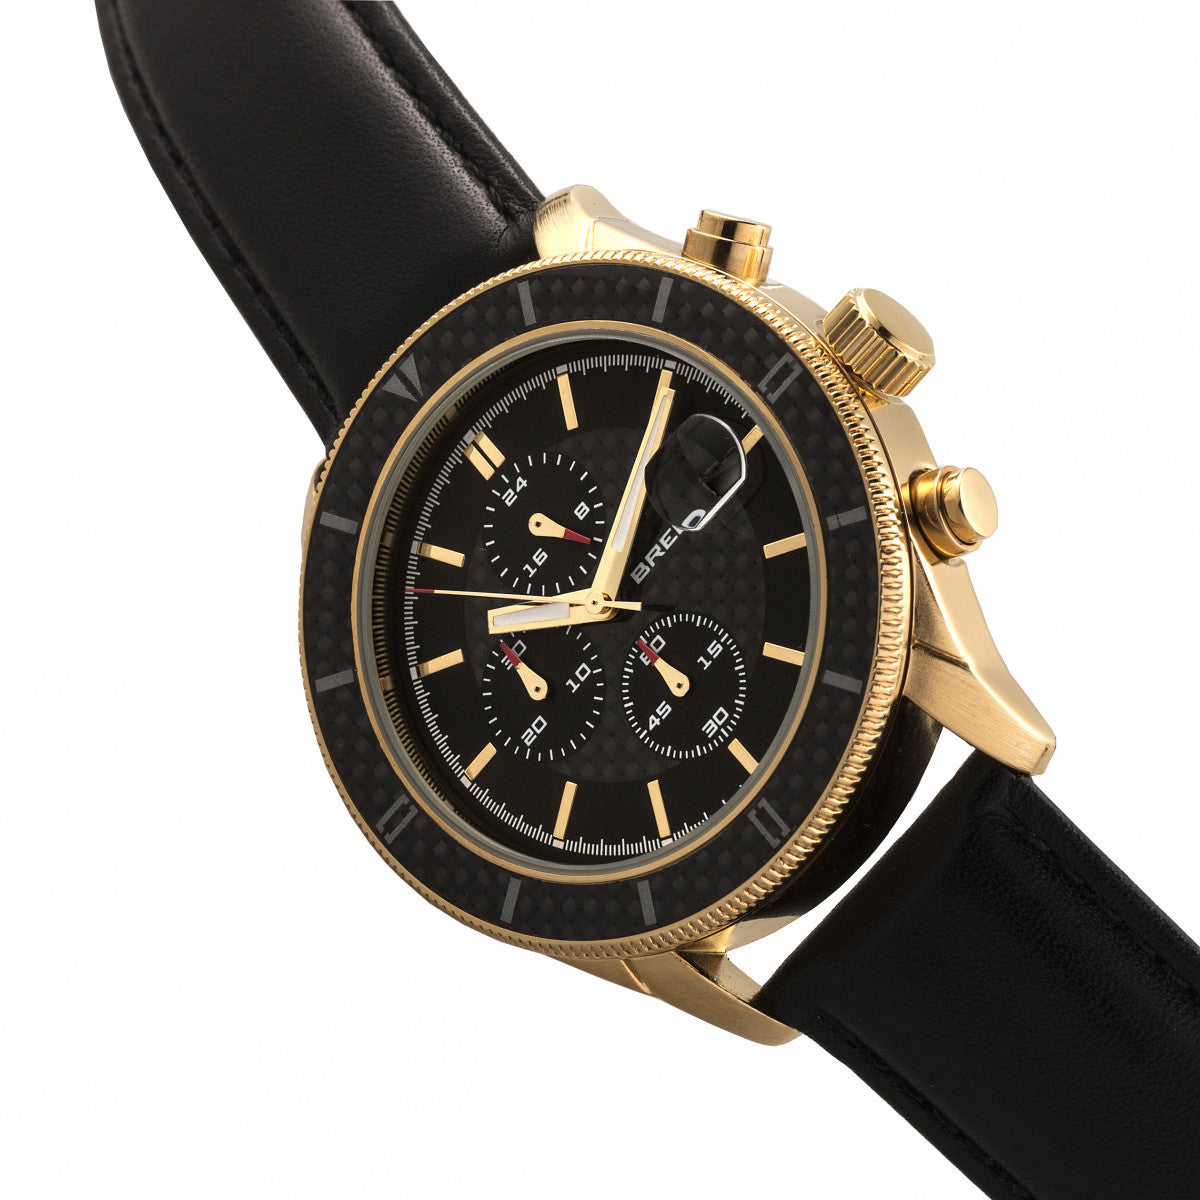 Breed Maverick Chronograph Leather-Band Watch w/Date - Gold/Black - BRD7506